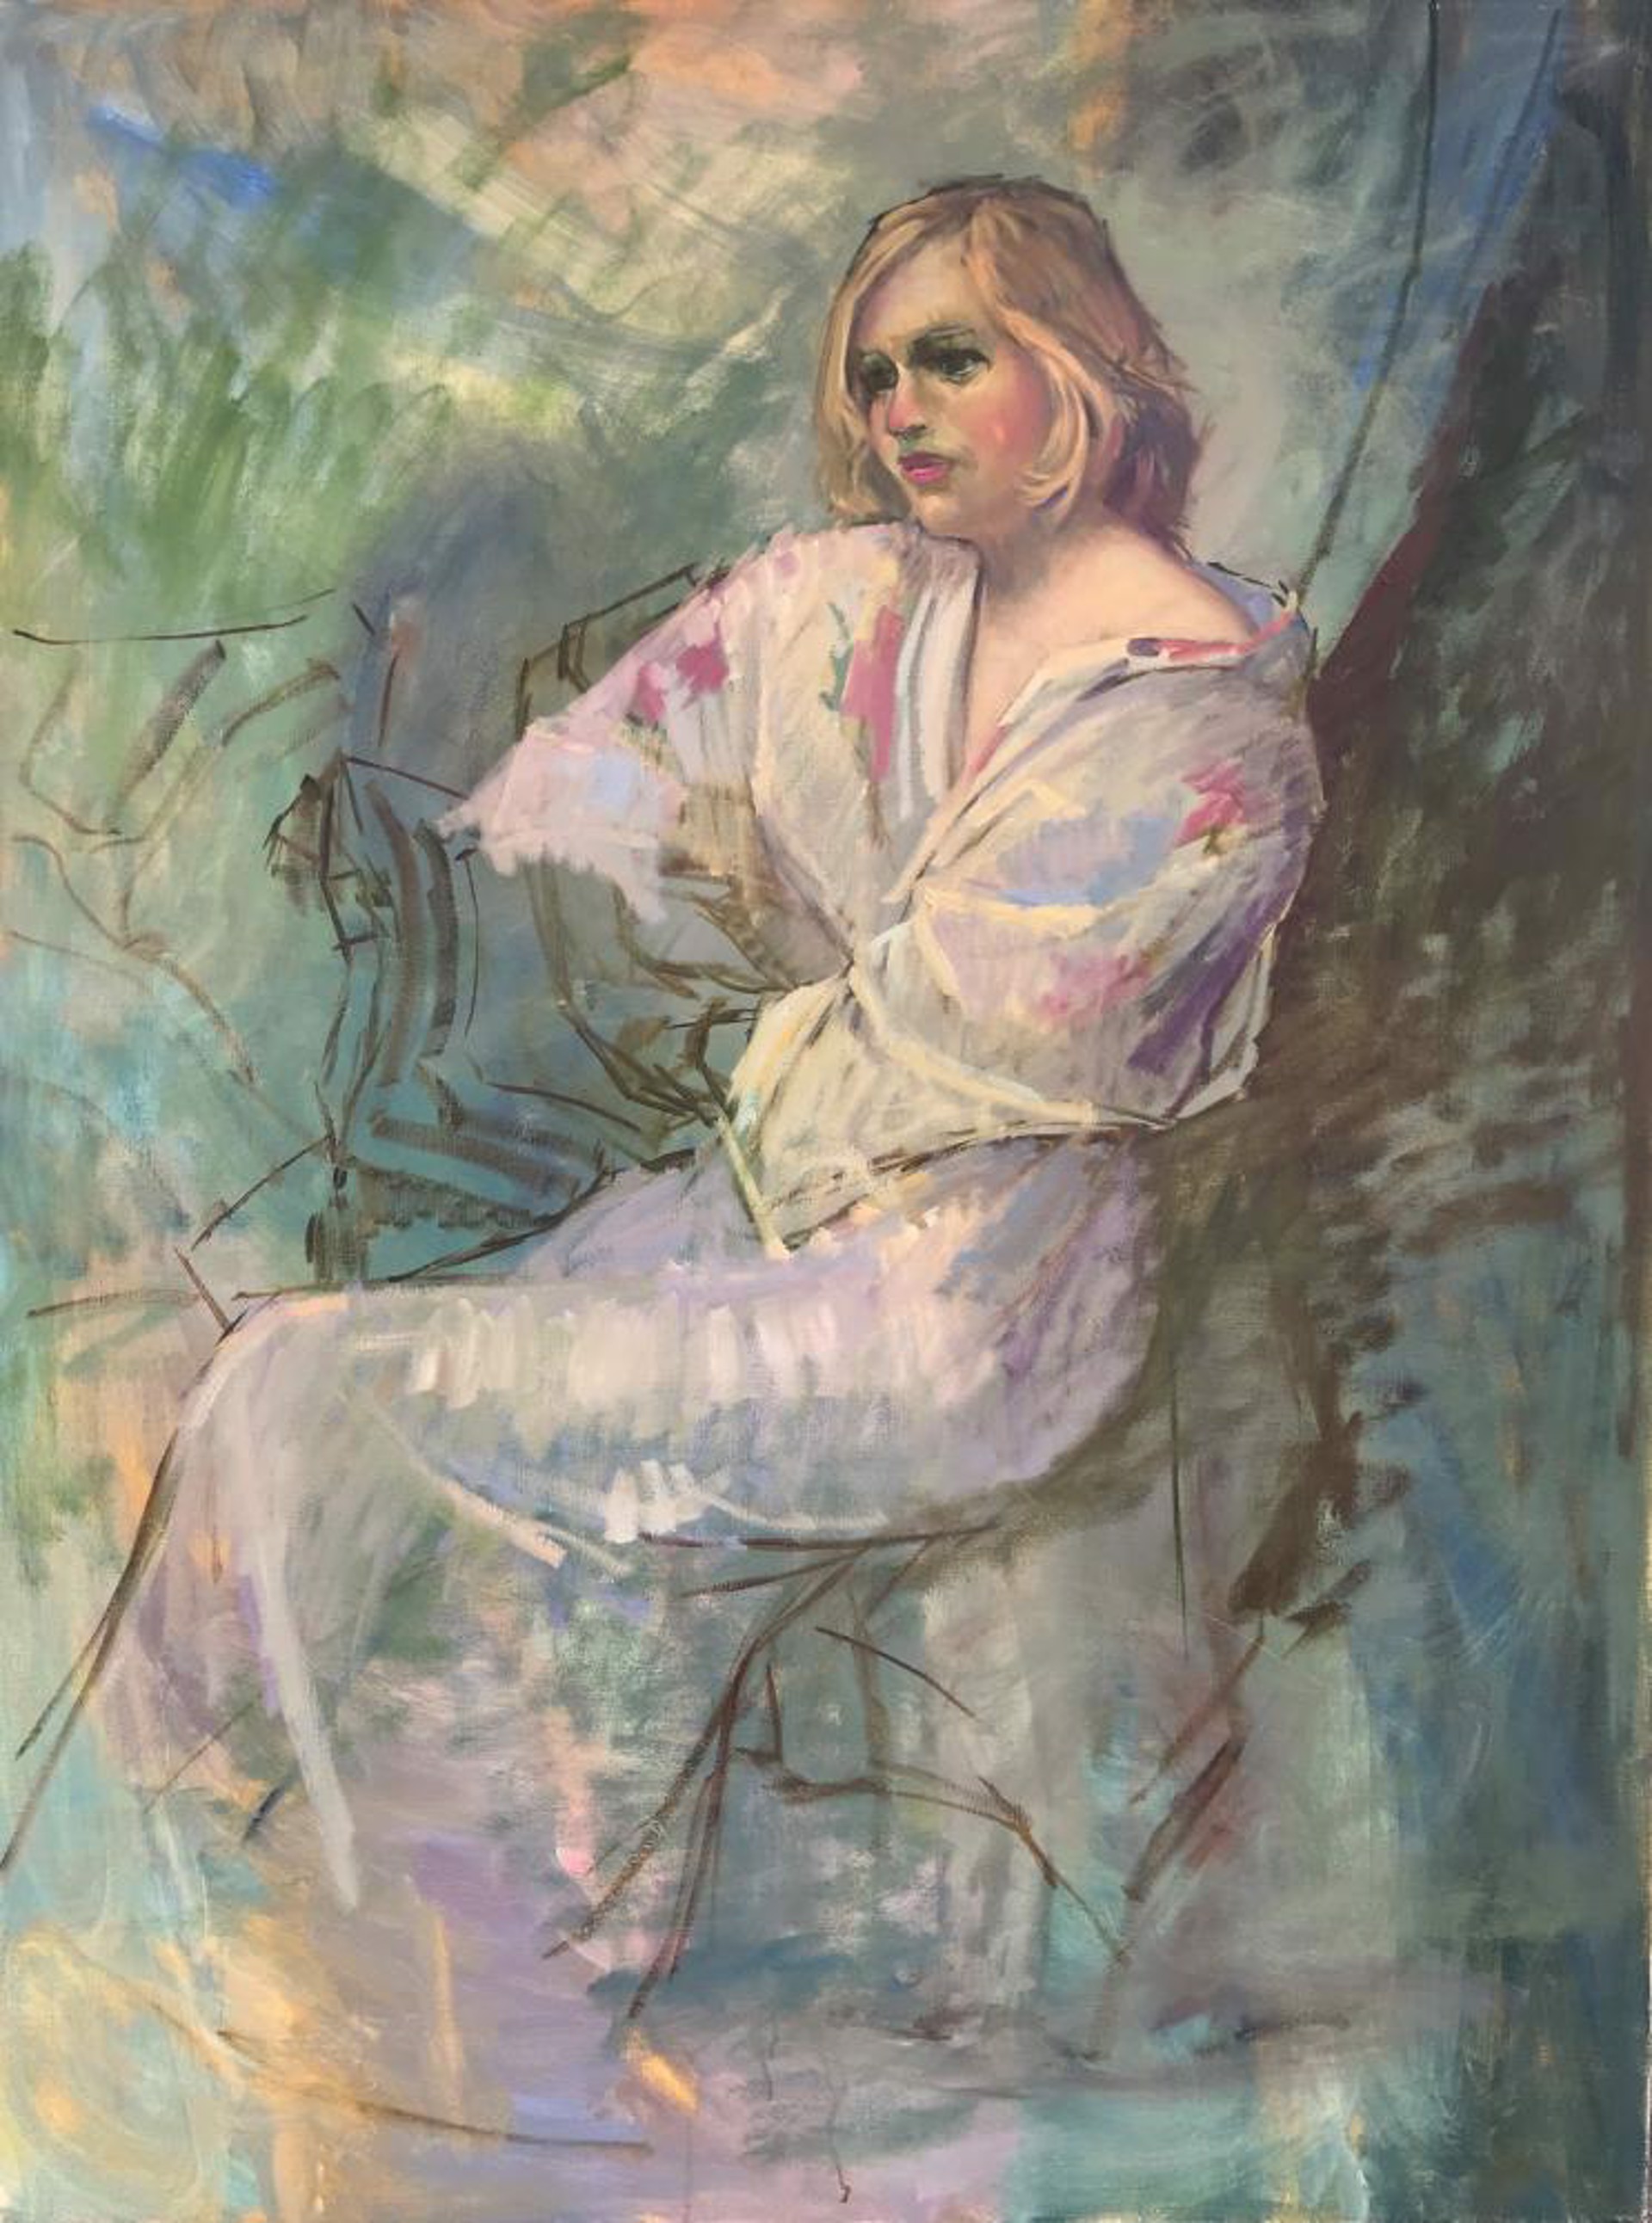 Her Morning Kimono by John Carroll Doyle